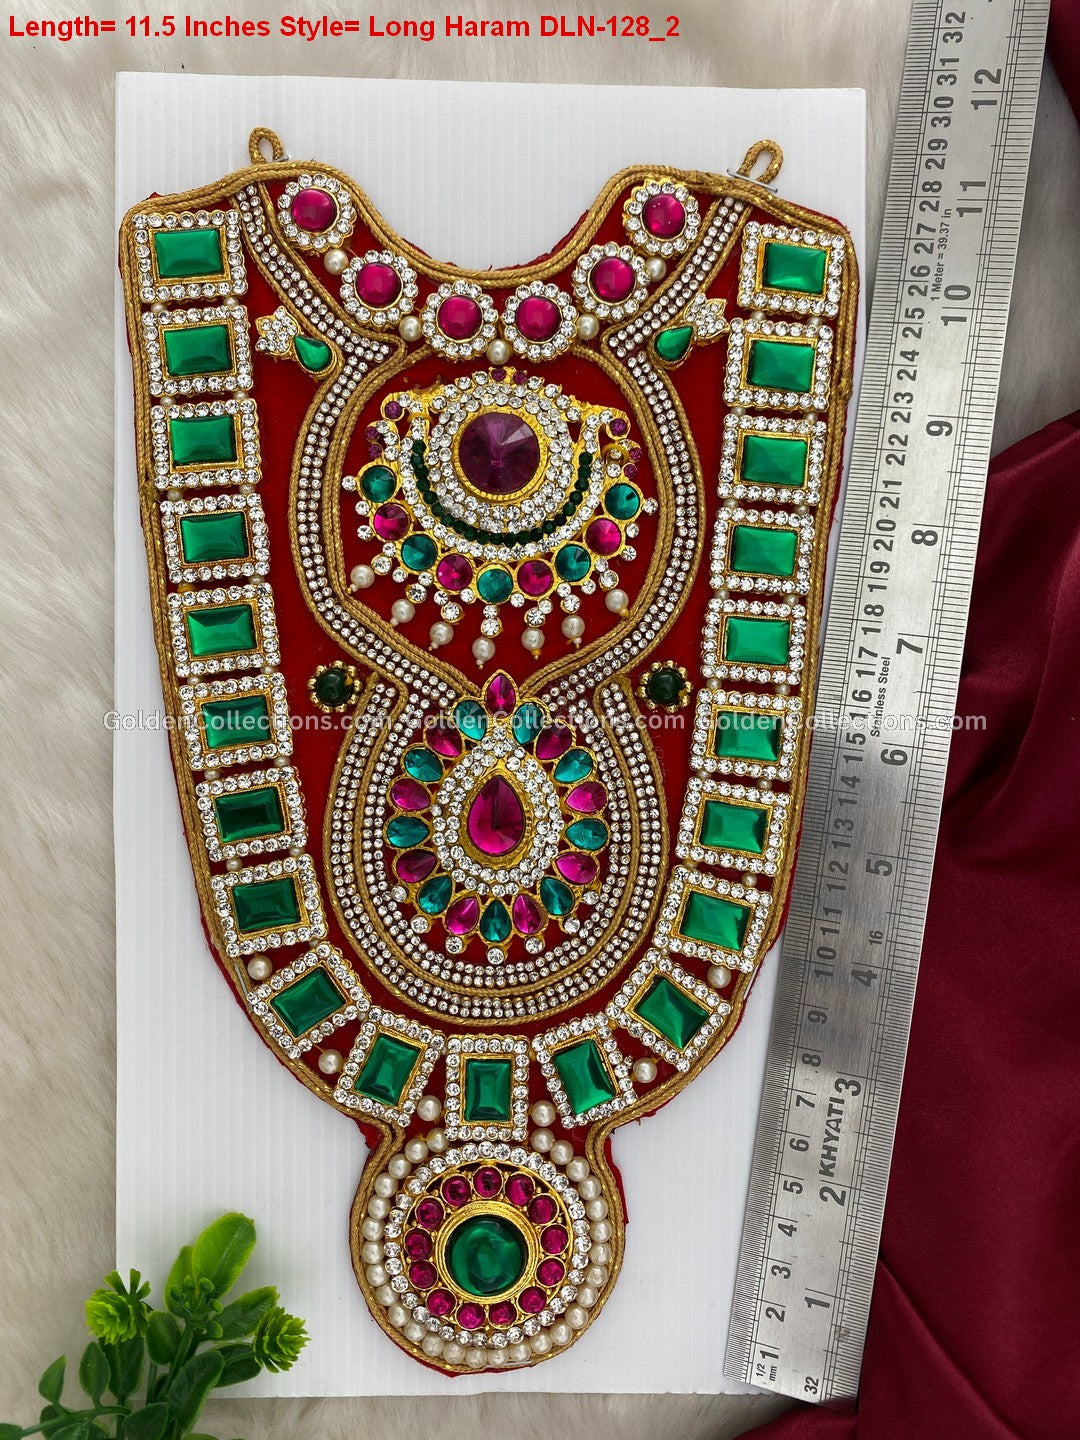 Goddess Lakshmi Ornate Long Necklace - DLN-128 2